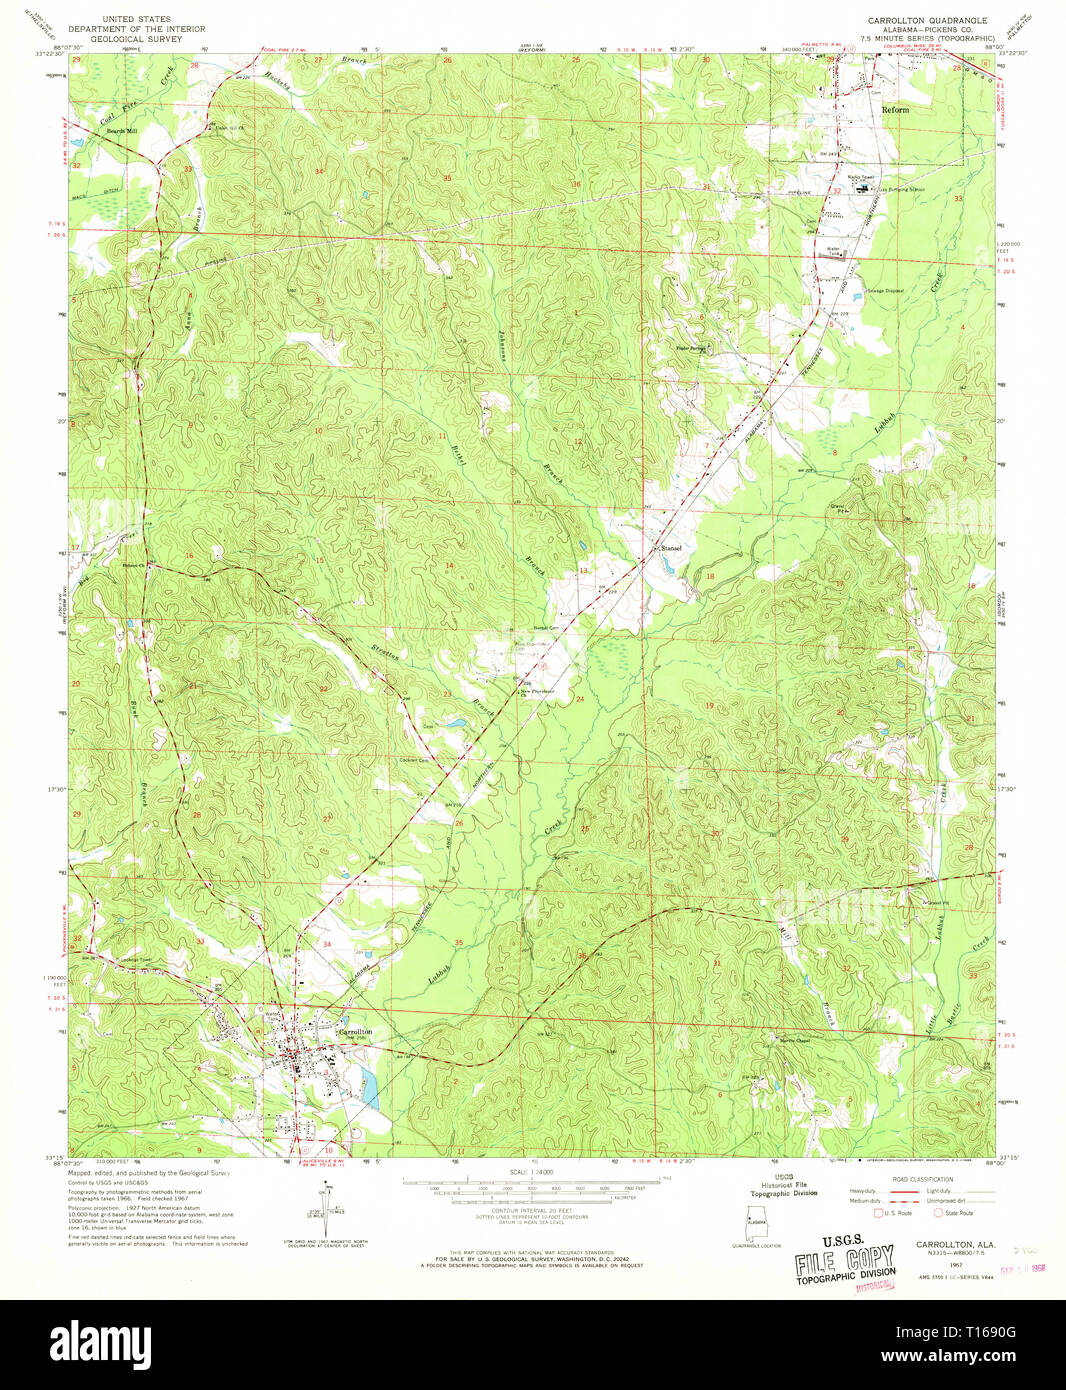 USGS TOPO Map Alabama AL Carrollton 303420 1967 24000 Stock Photo